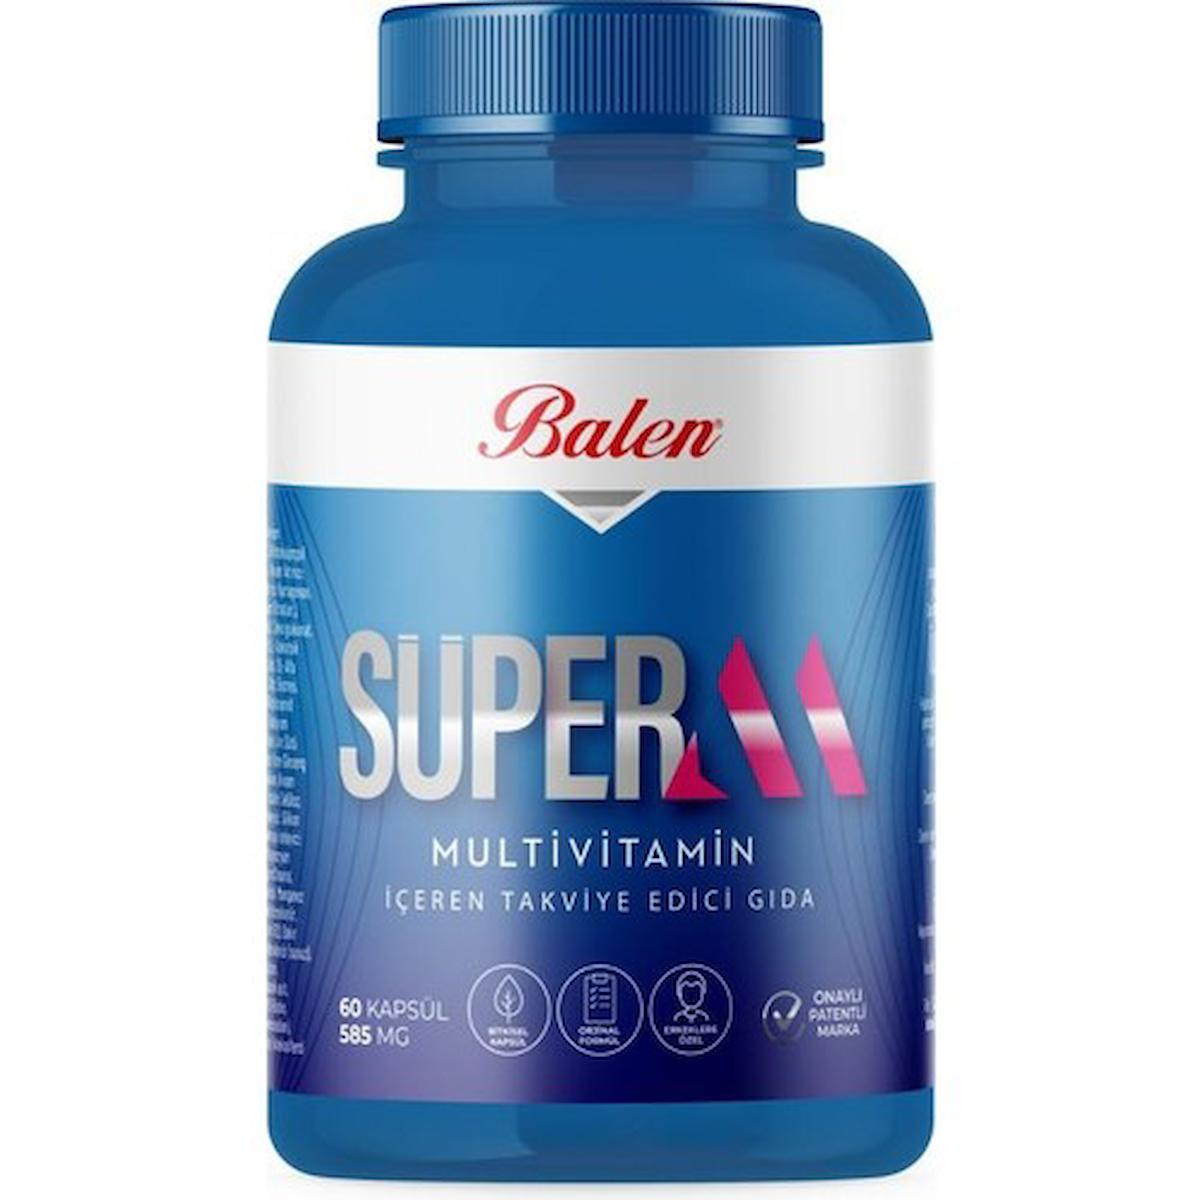 Balen Süper-M Sade Unisex Vitamin 60 Kapsül